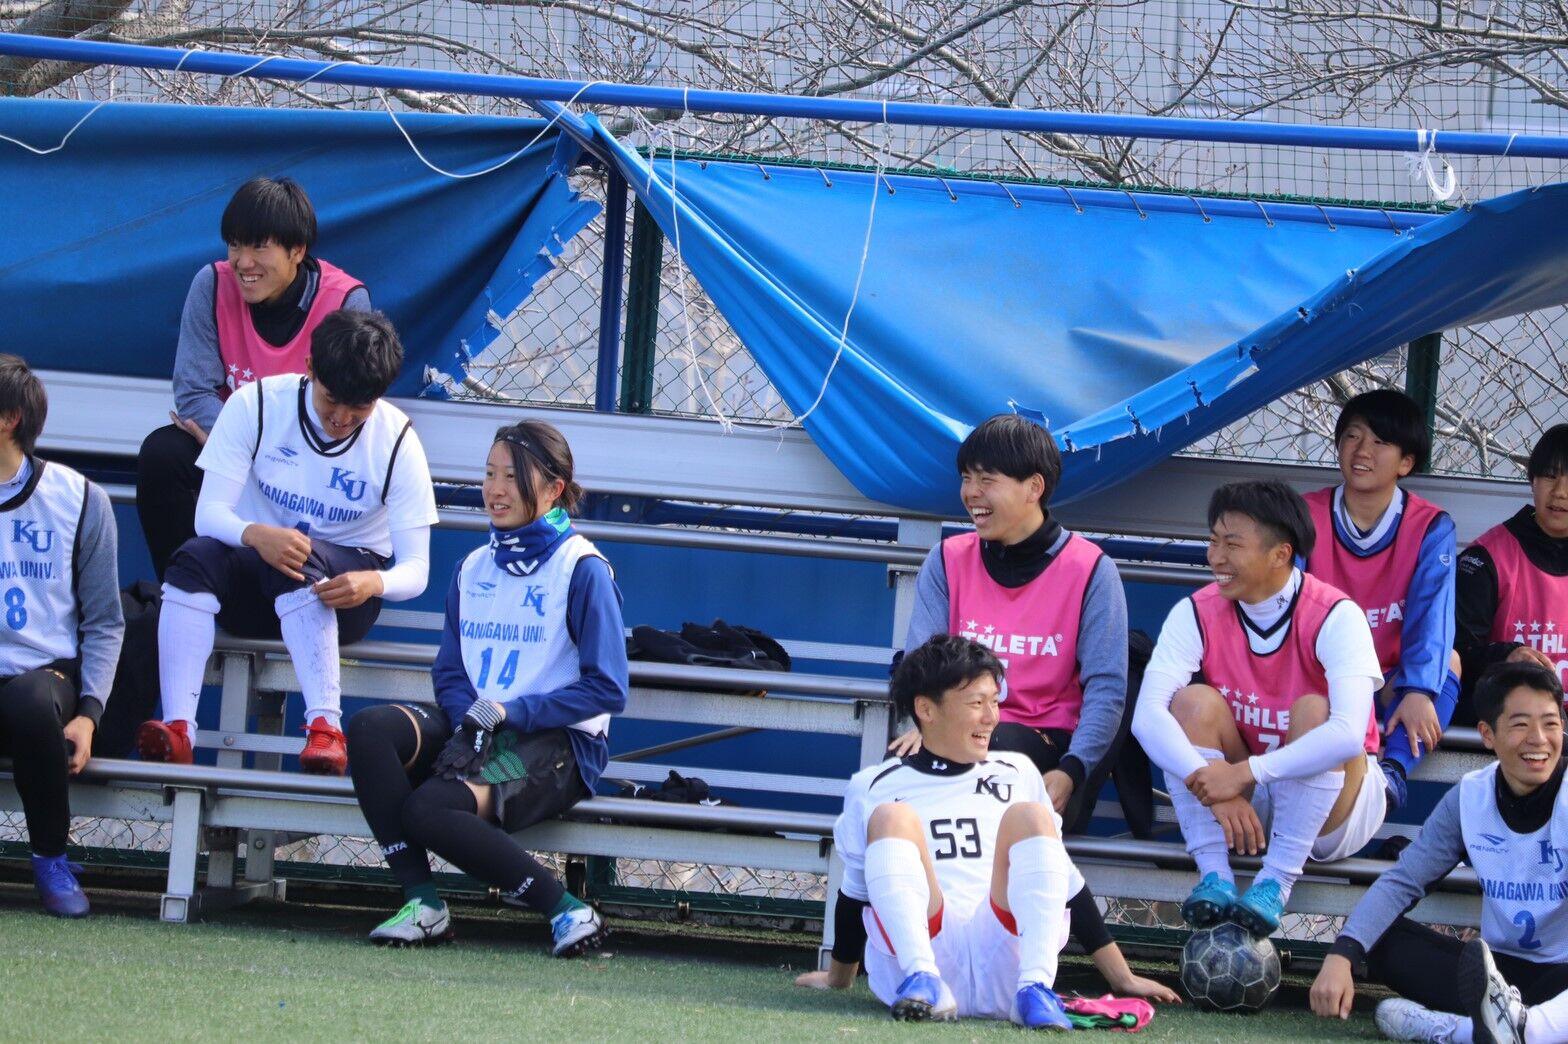 https://football.ku-sports.jp/blog/photoreport/images/20200222102836.jpg